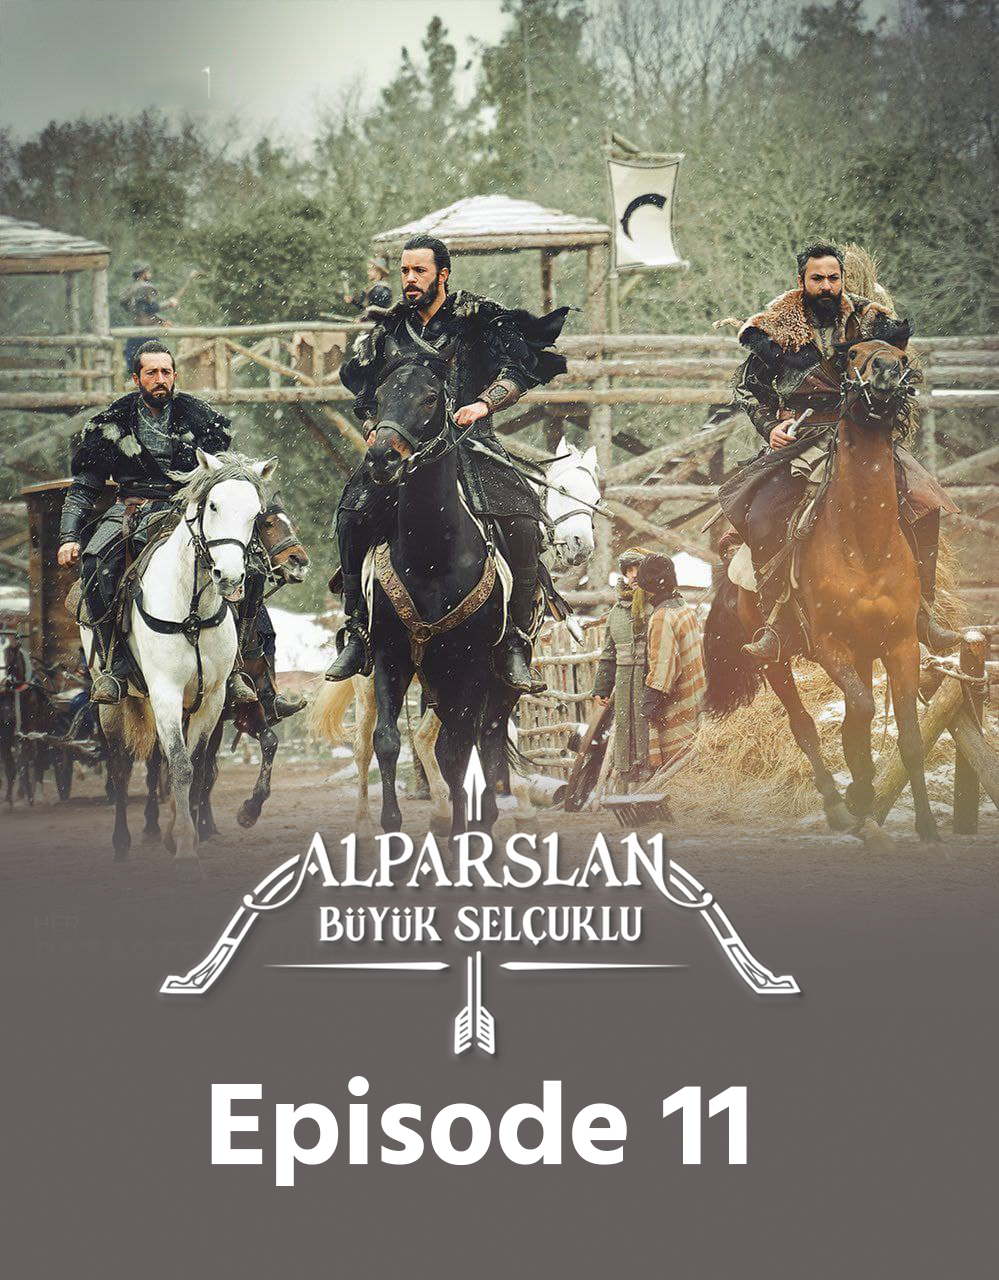 Alparslan Buyuk Selcuklu Episode 11 With English Subtitle